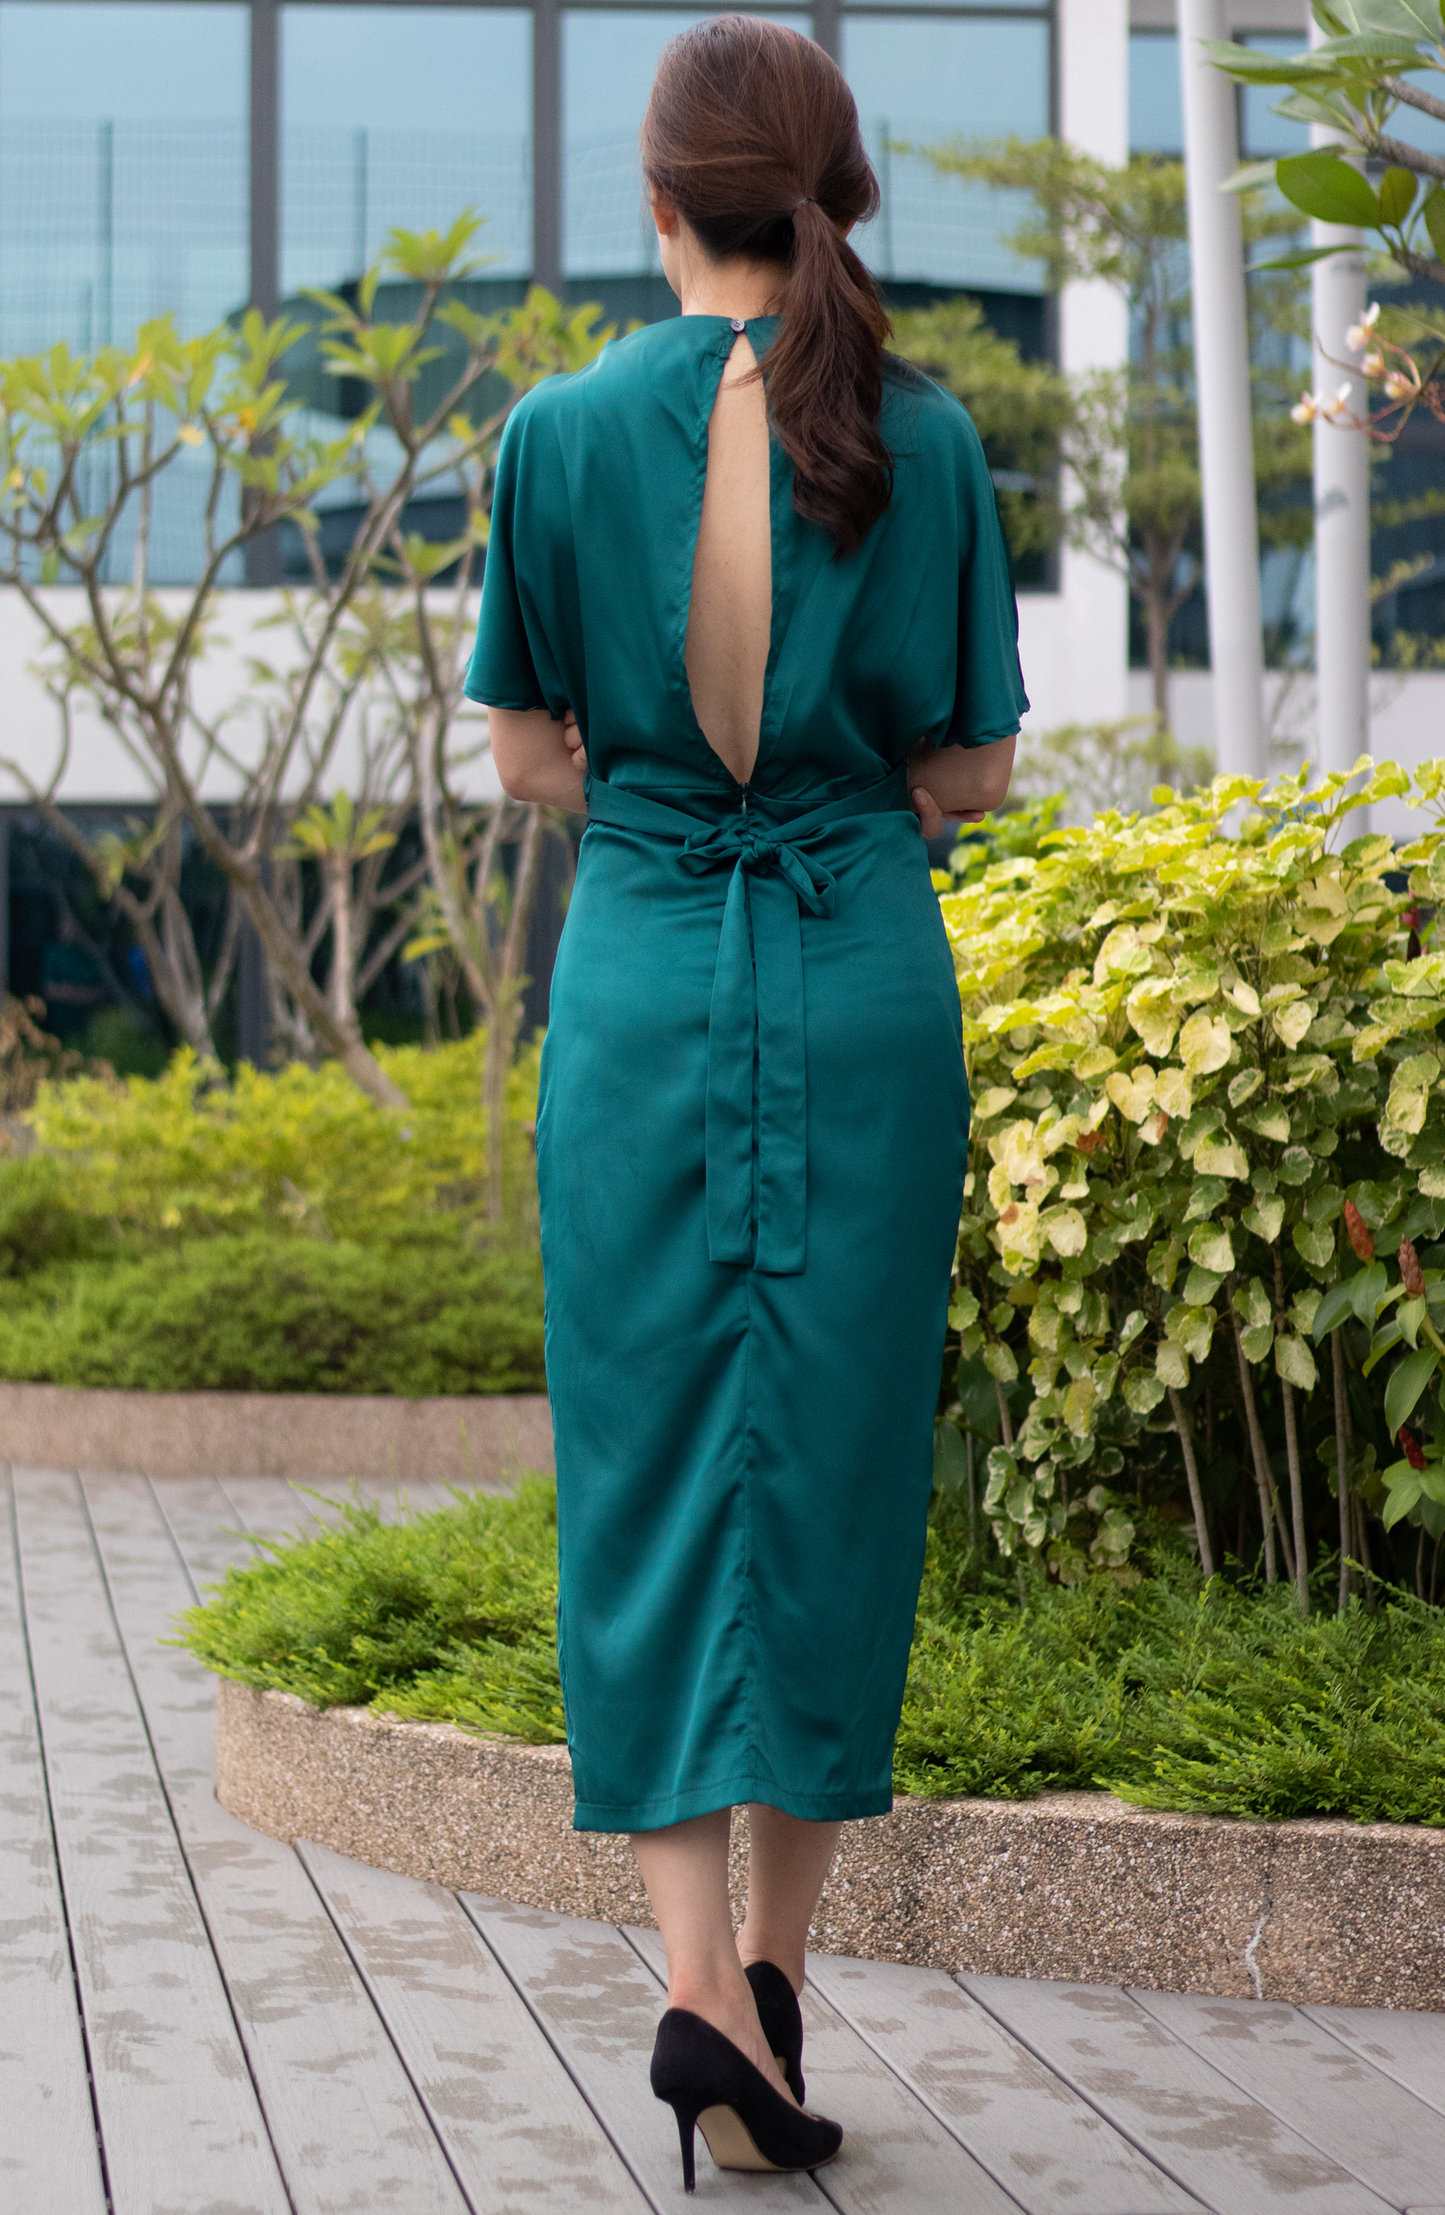 Emerald Green Elegant Satin-like High-Neck Collar Tie Low Back Pencil Dress